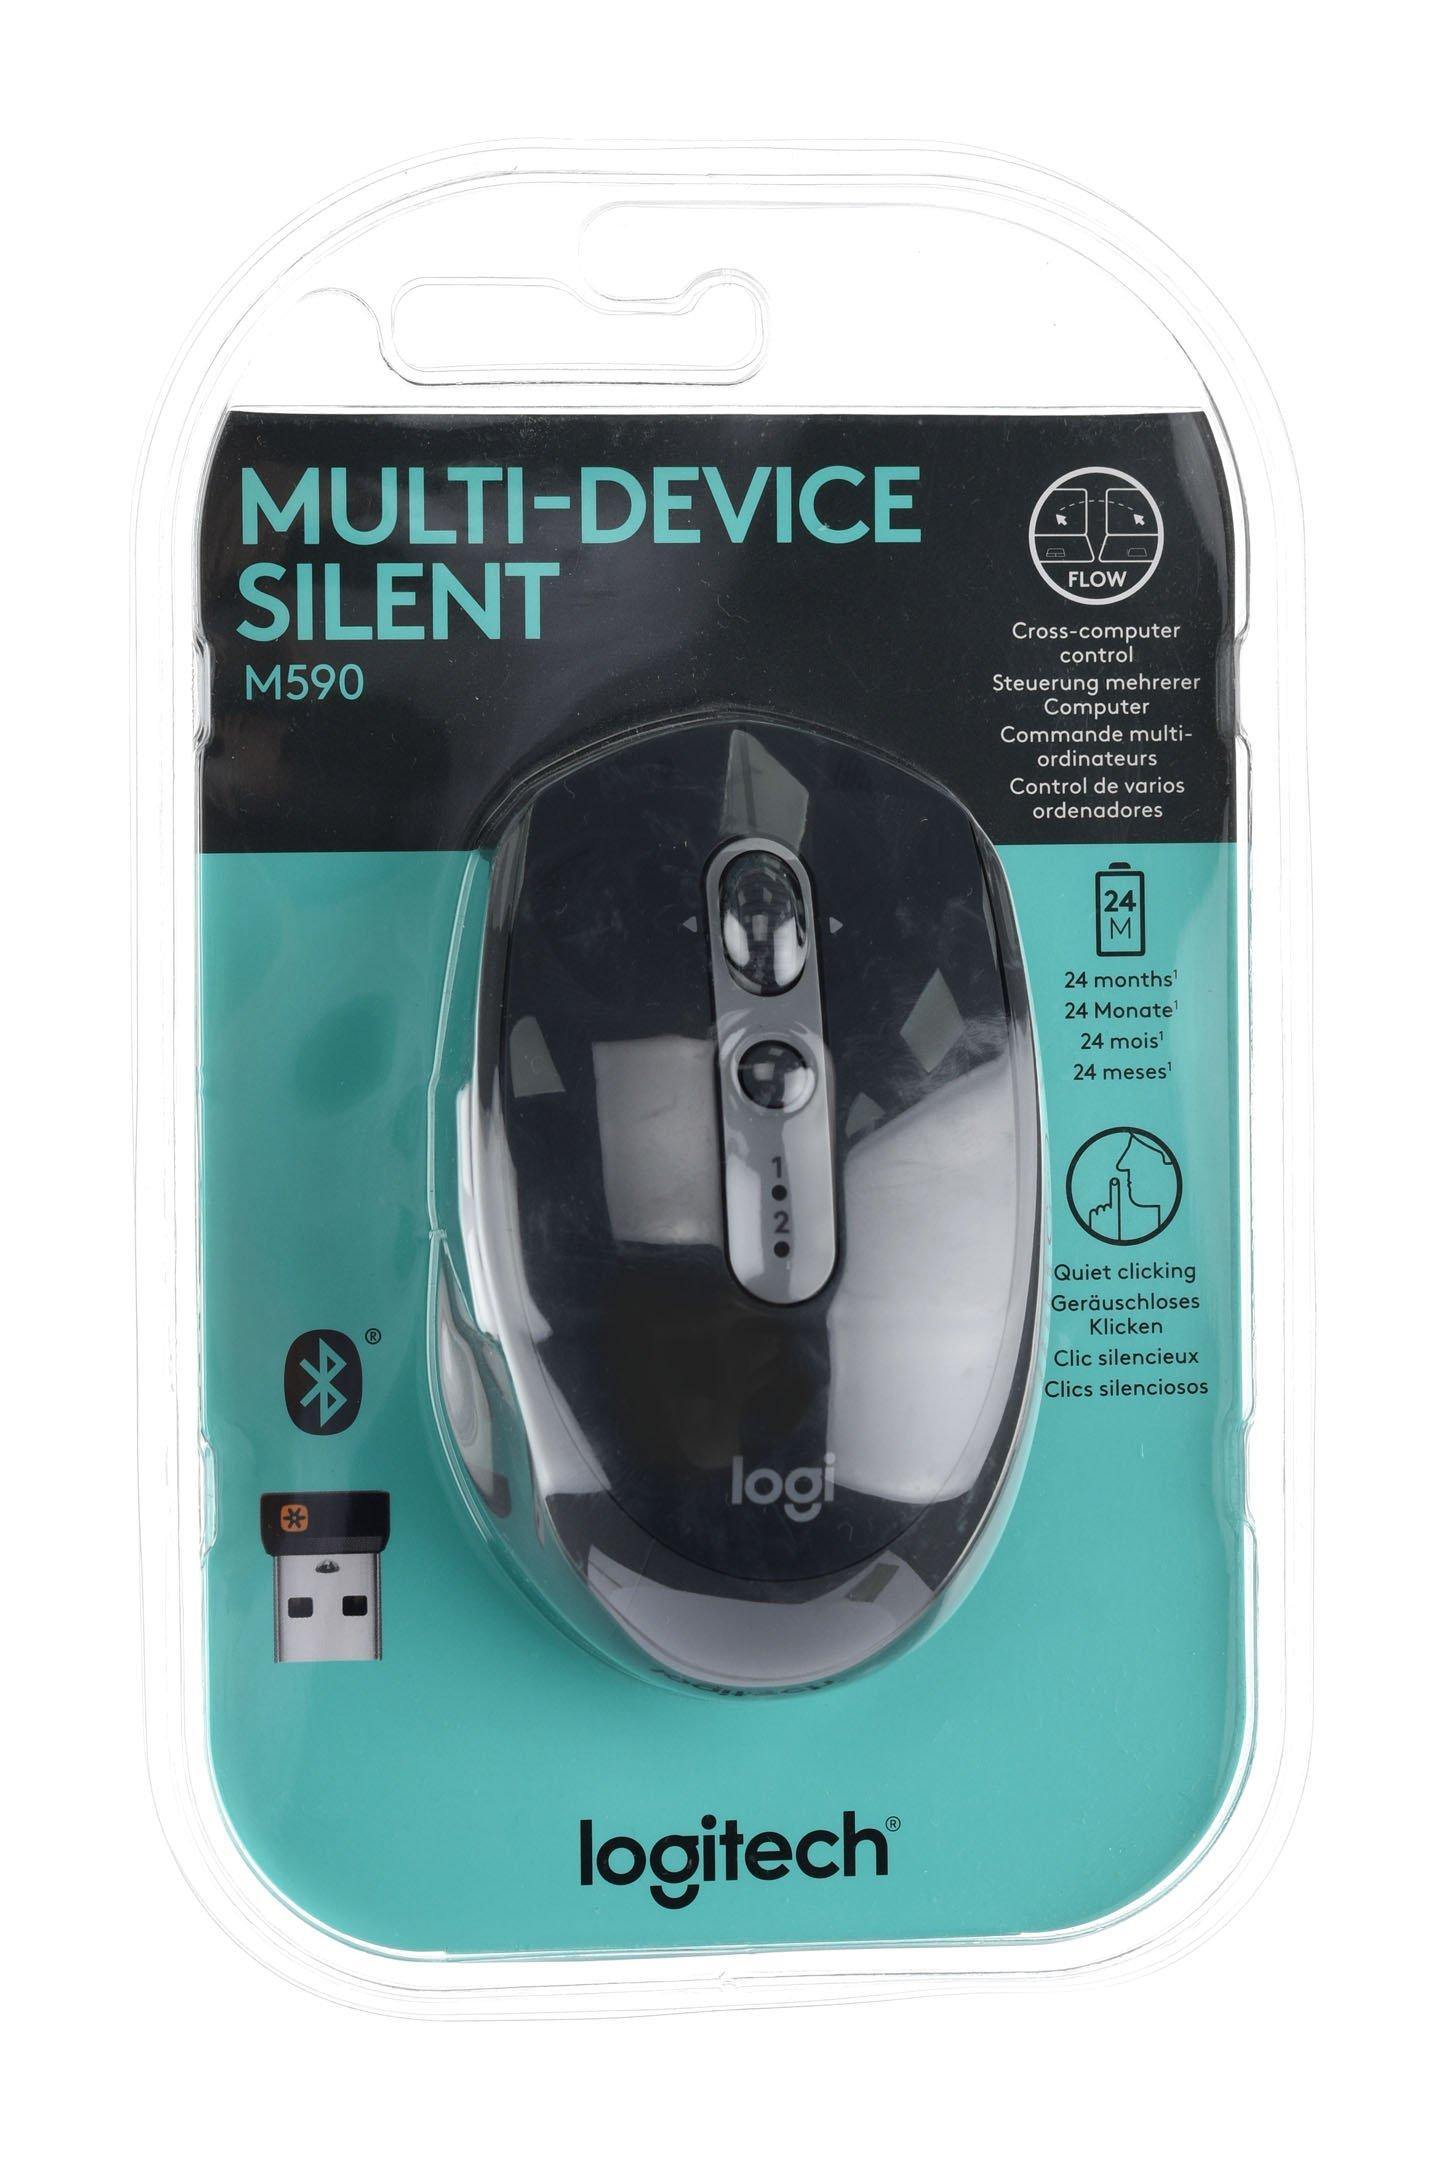 Rondlopen Vulgariteit Aan het liegen LOGITECH M590 Multi-Device Silent Wireless Mouse, Graphite Tonal - eXtra  Saudi